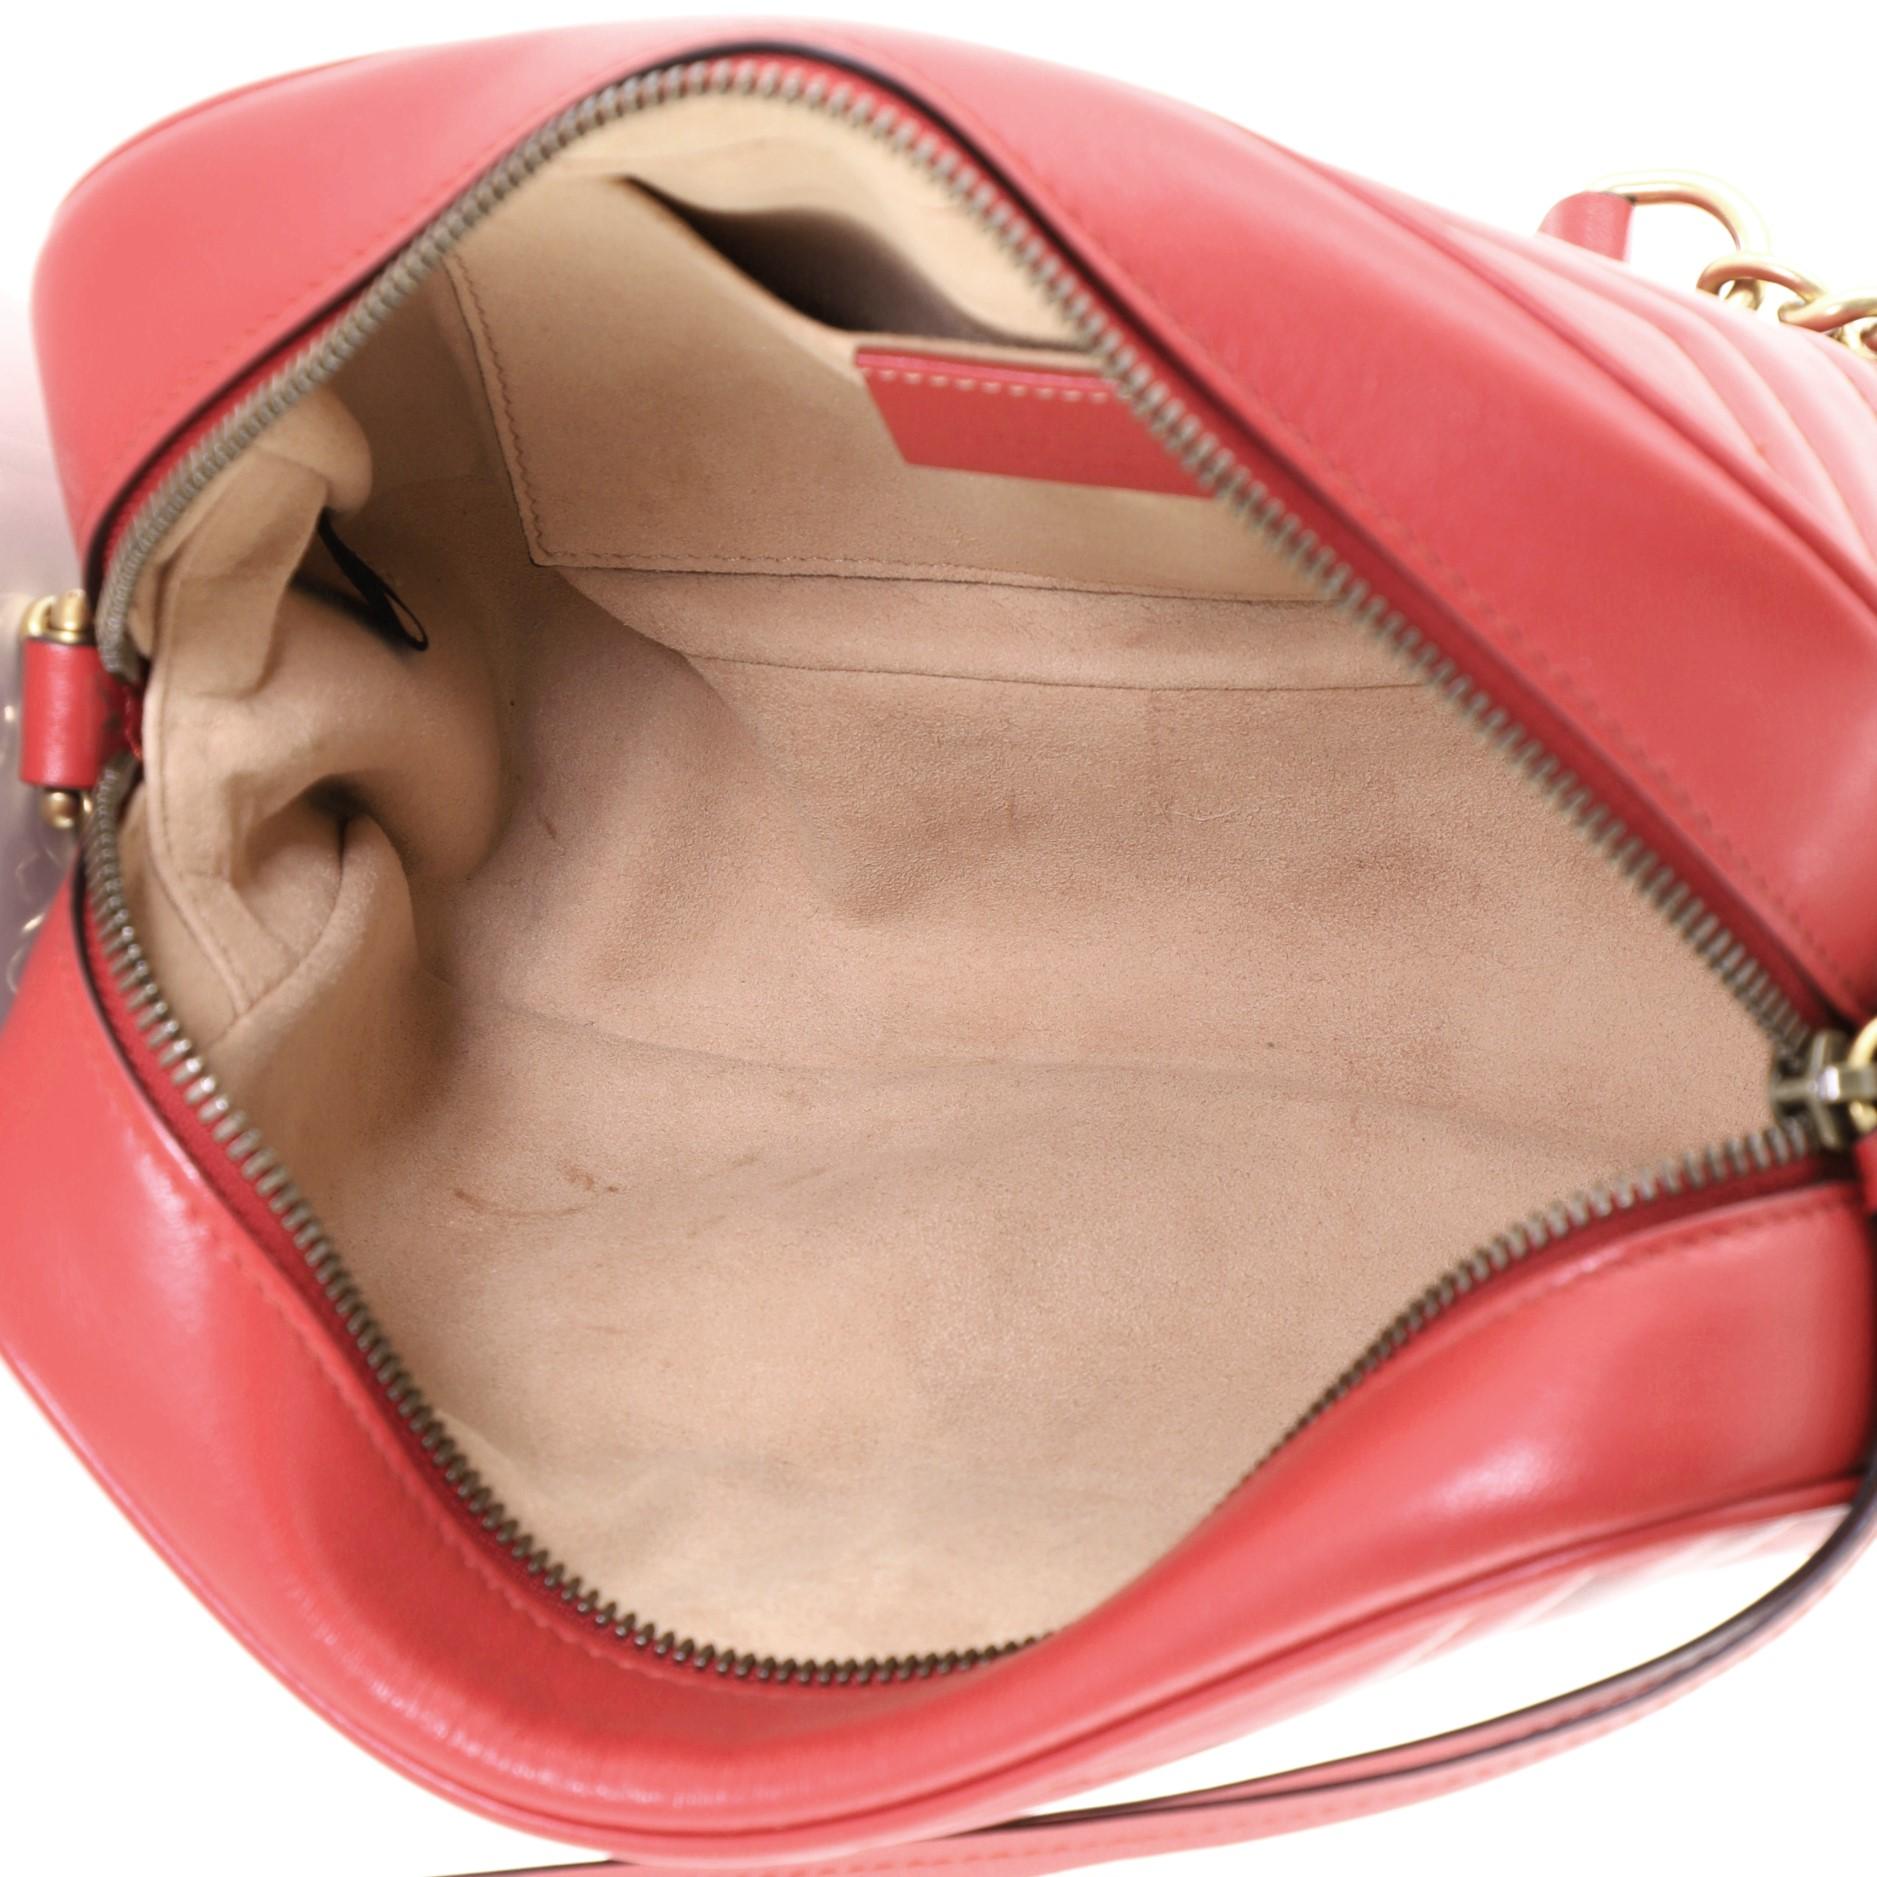 Women's or Men's Gucci GG Marmont Shoulder Bag